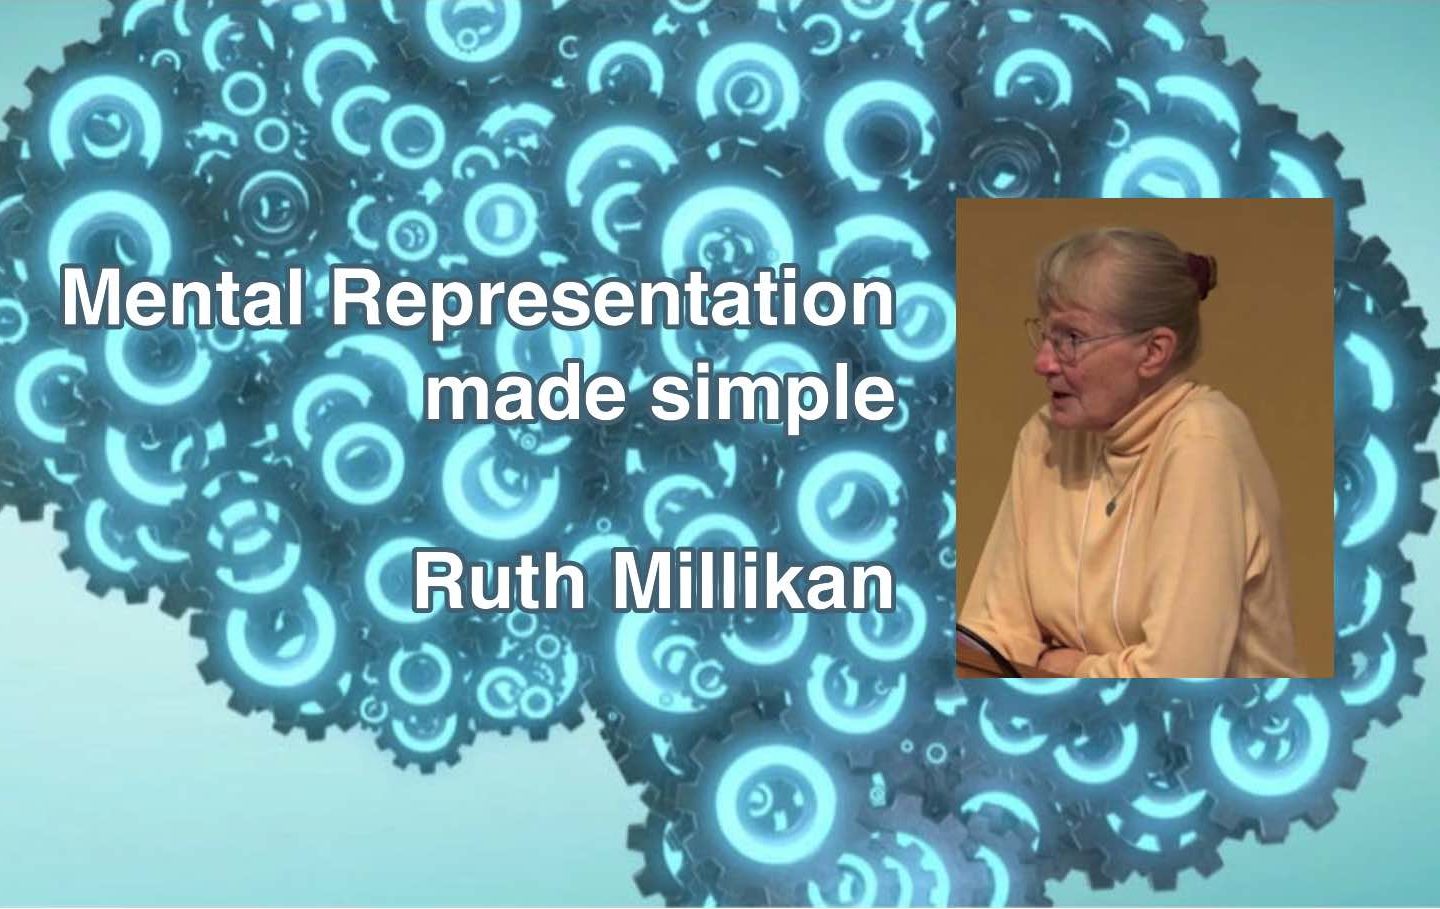 Ruth Millikan will livestream “Mental Representation made simple”